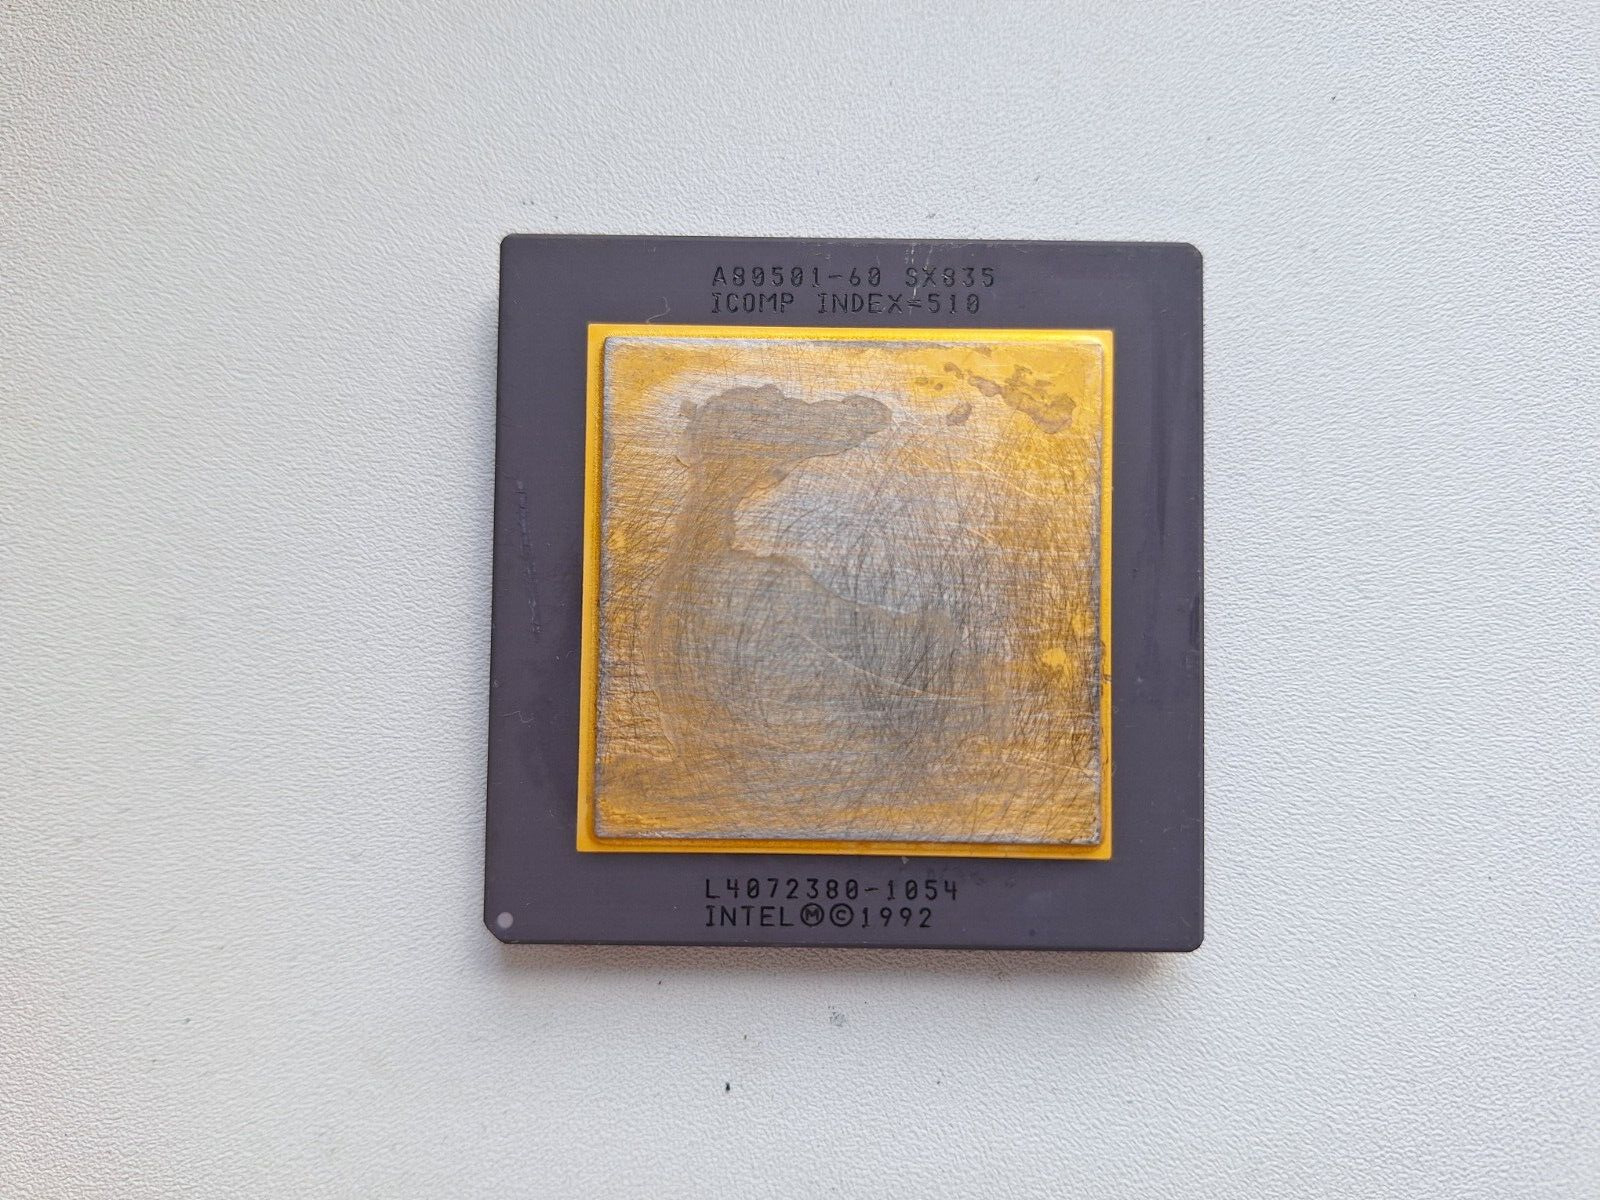 Intel Pentium 60 A80501-60 SX835 rare FDIV bug vintage CPU GOLD # 2